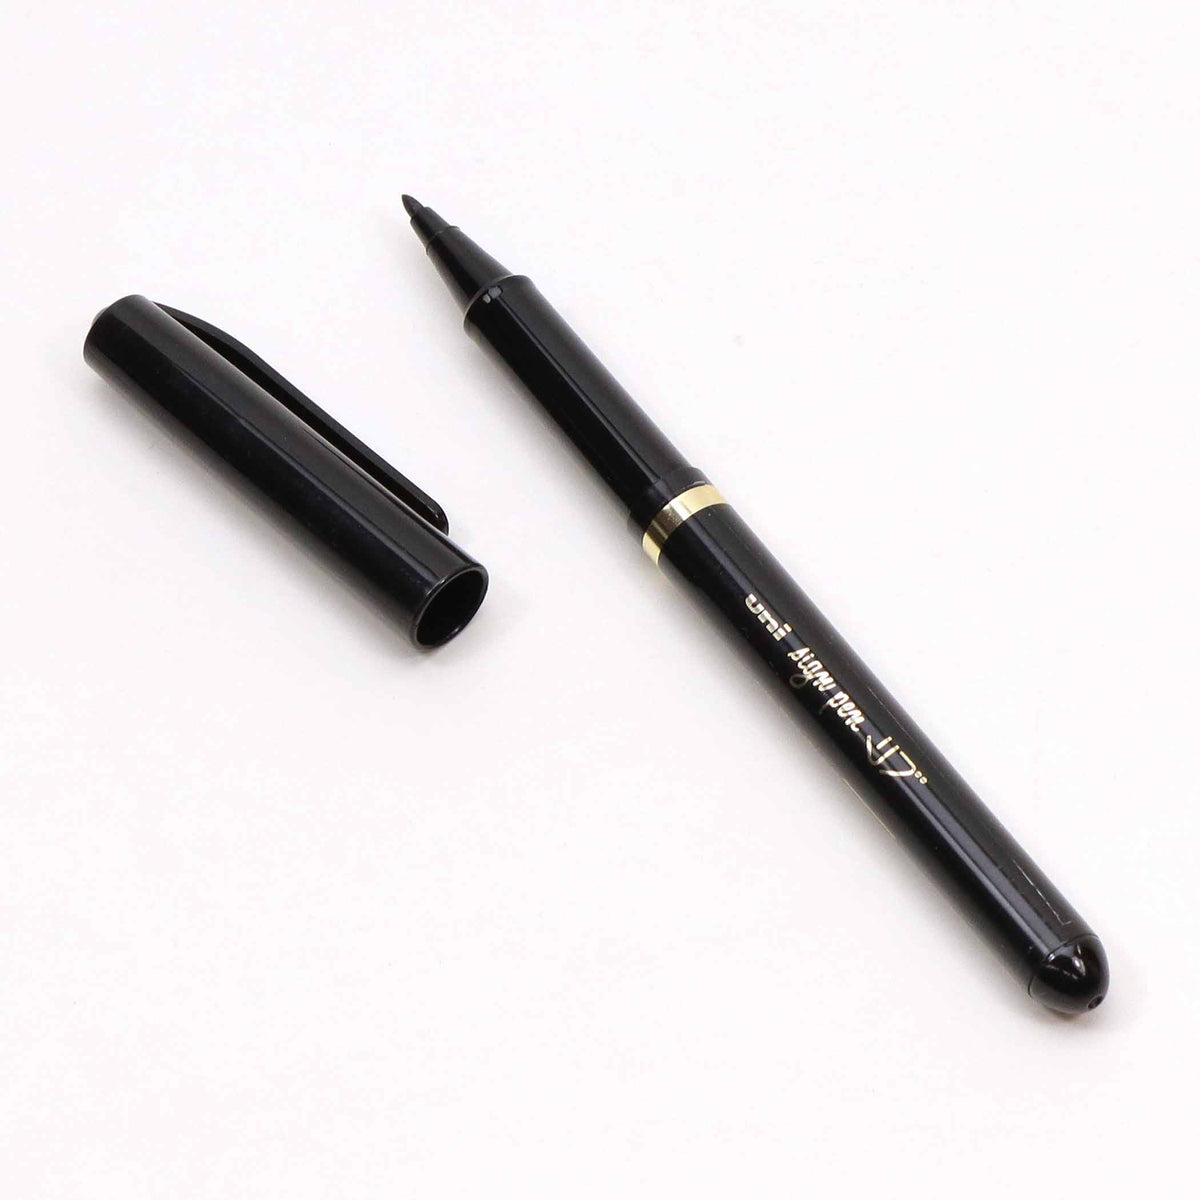 Uni-Ball MyT7 N Felt Tip Sign Pen, Black